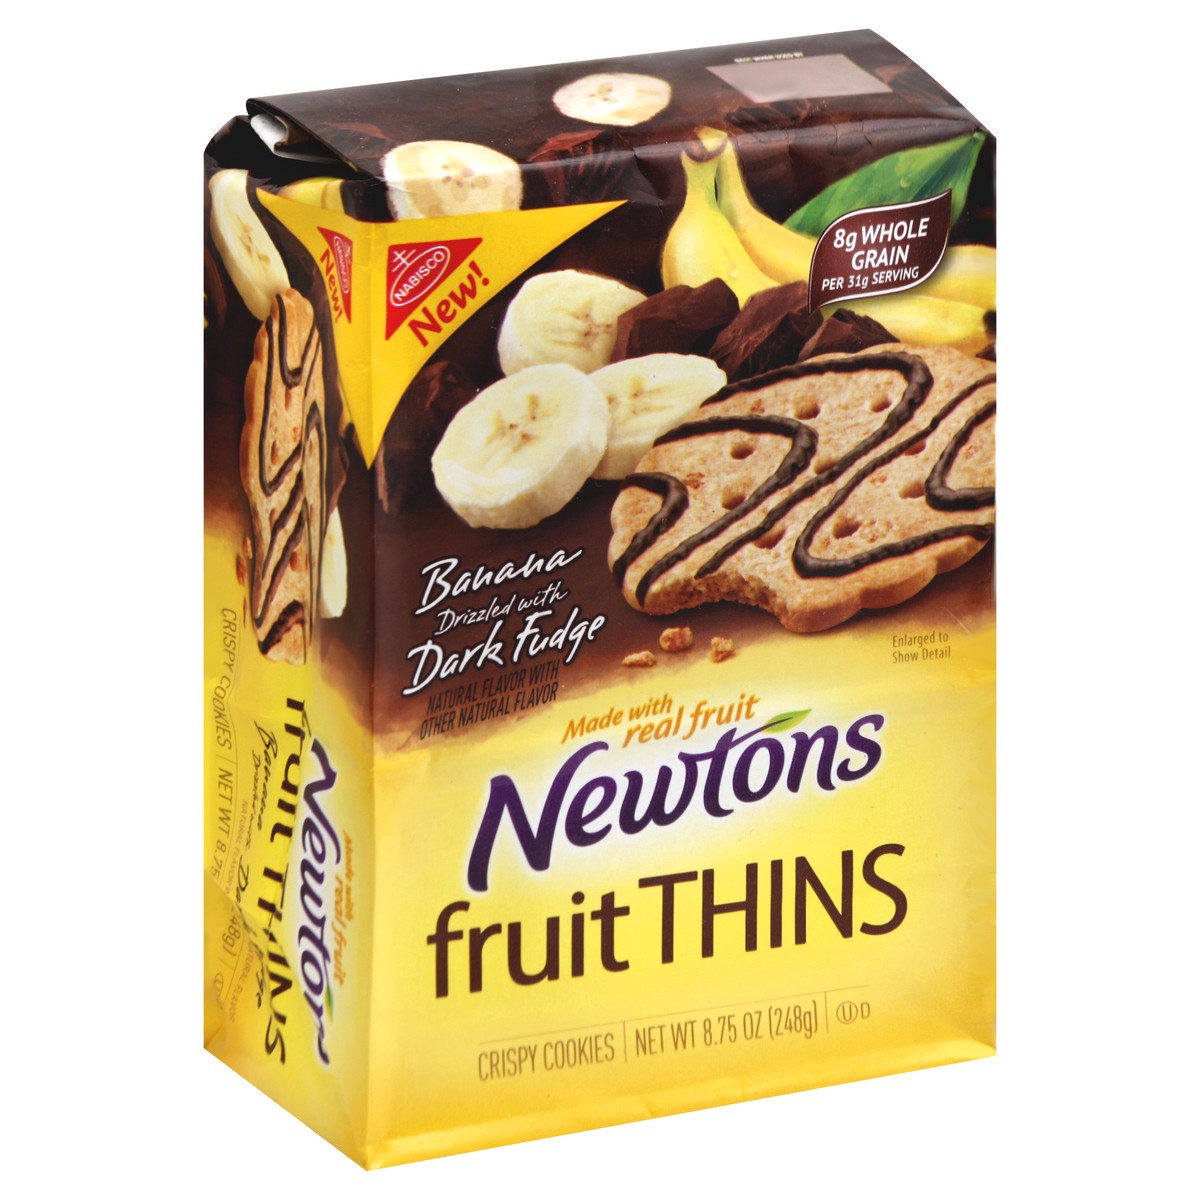 slide 6 of 6, Nabisco Newtons Fruit Thins Banana Crispy Cookies Drizzled With Dark Fudge, 8.75 oz bag